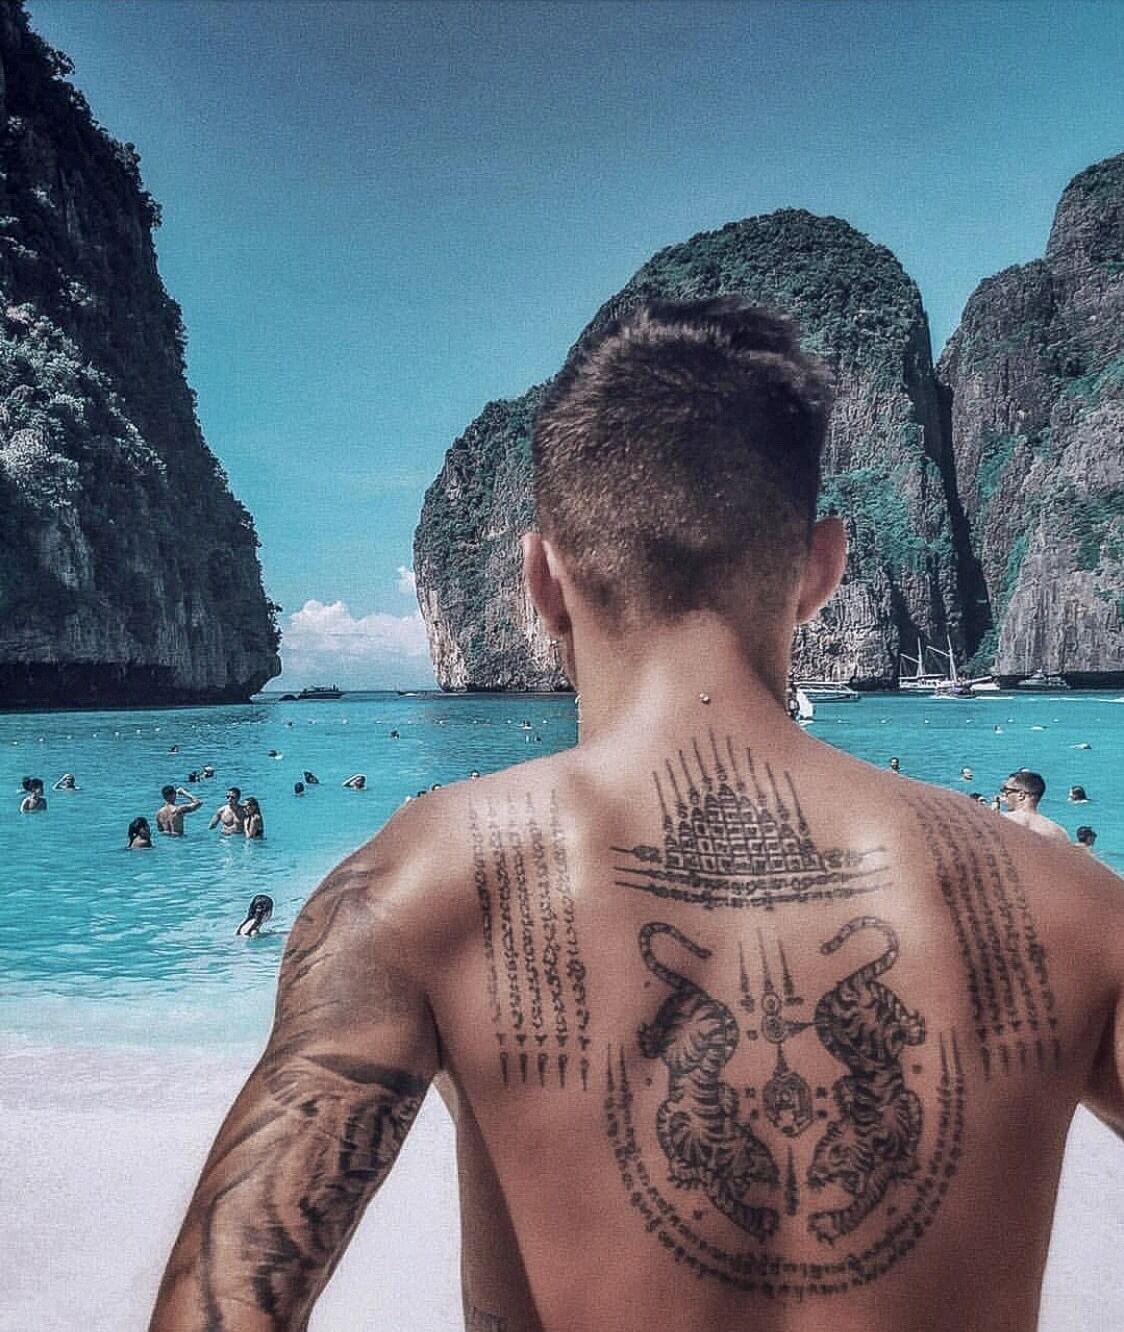 Getting a Sak Yant Tattoo in Thailand